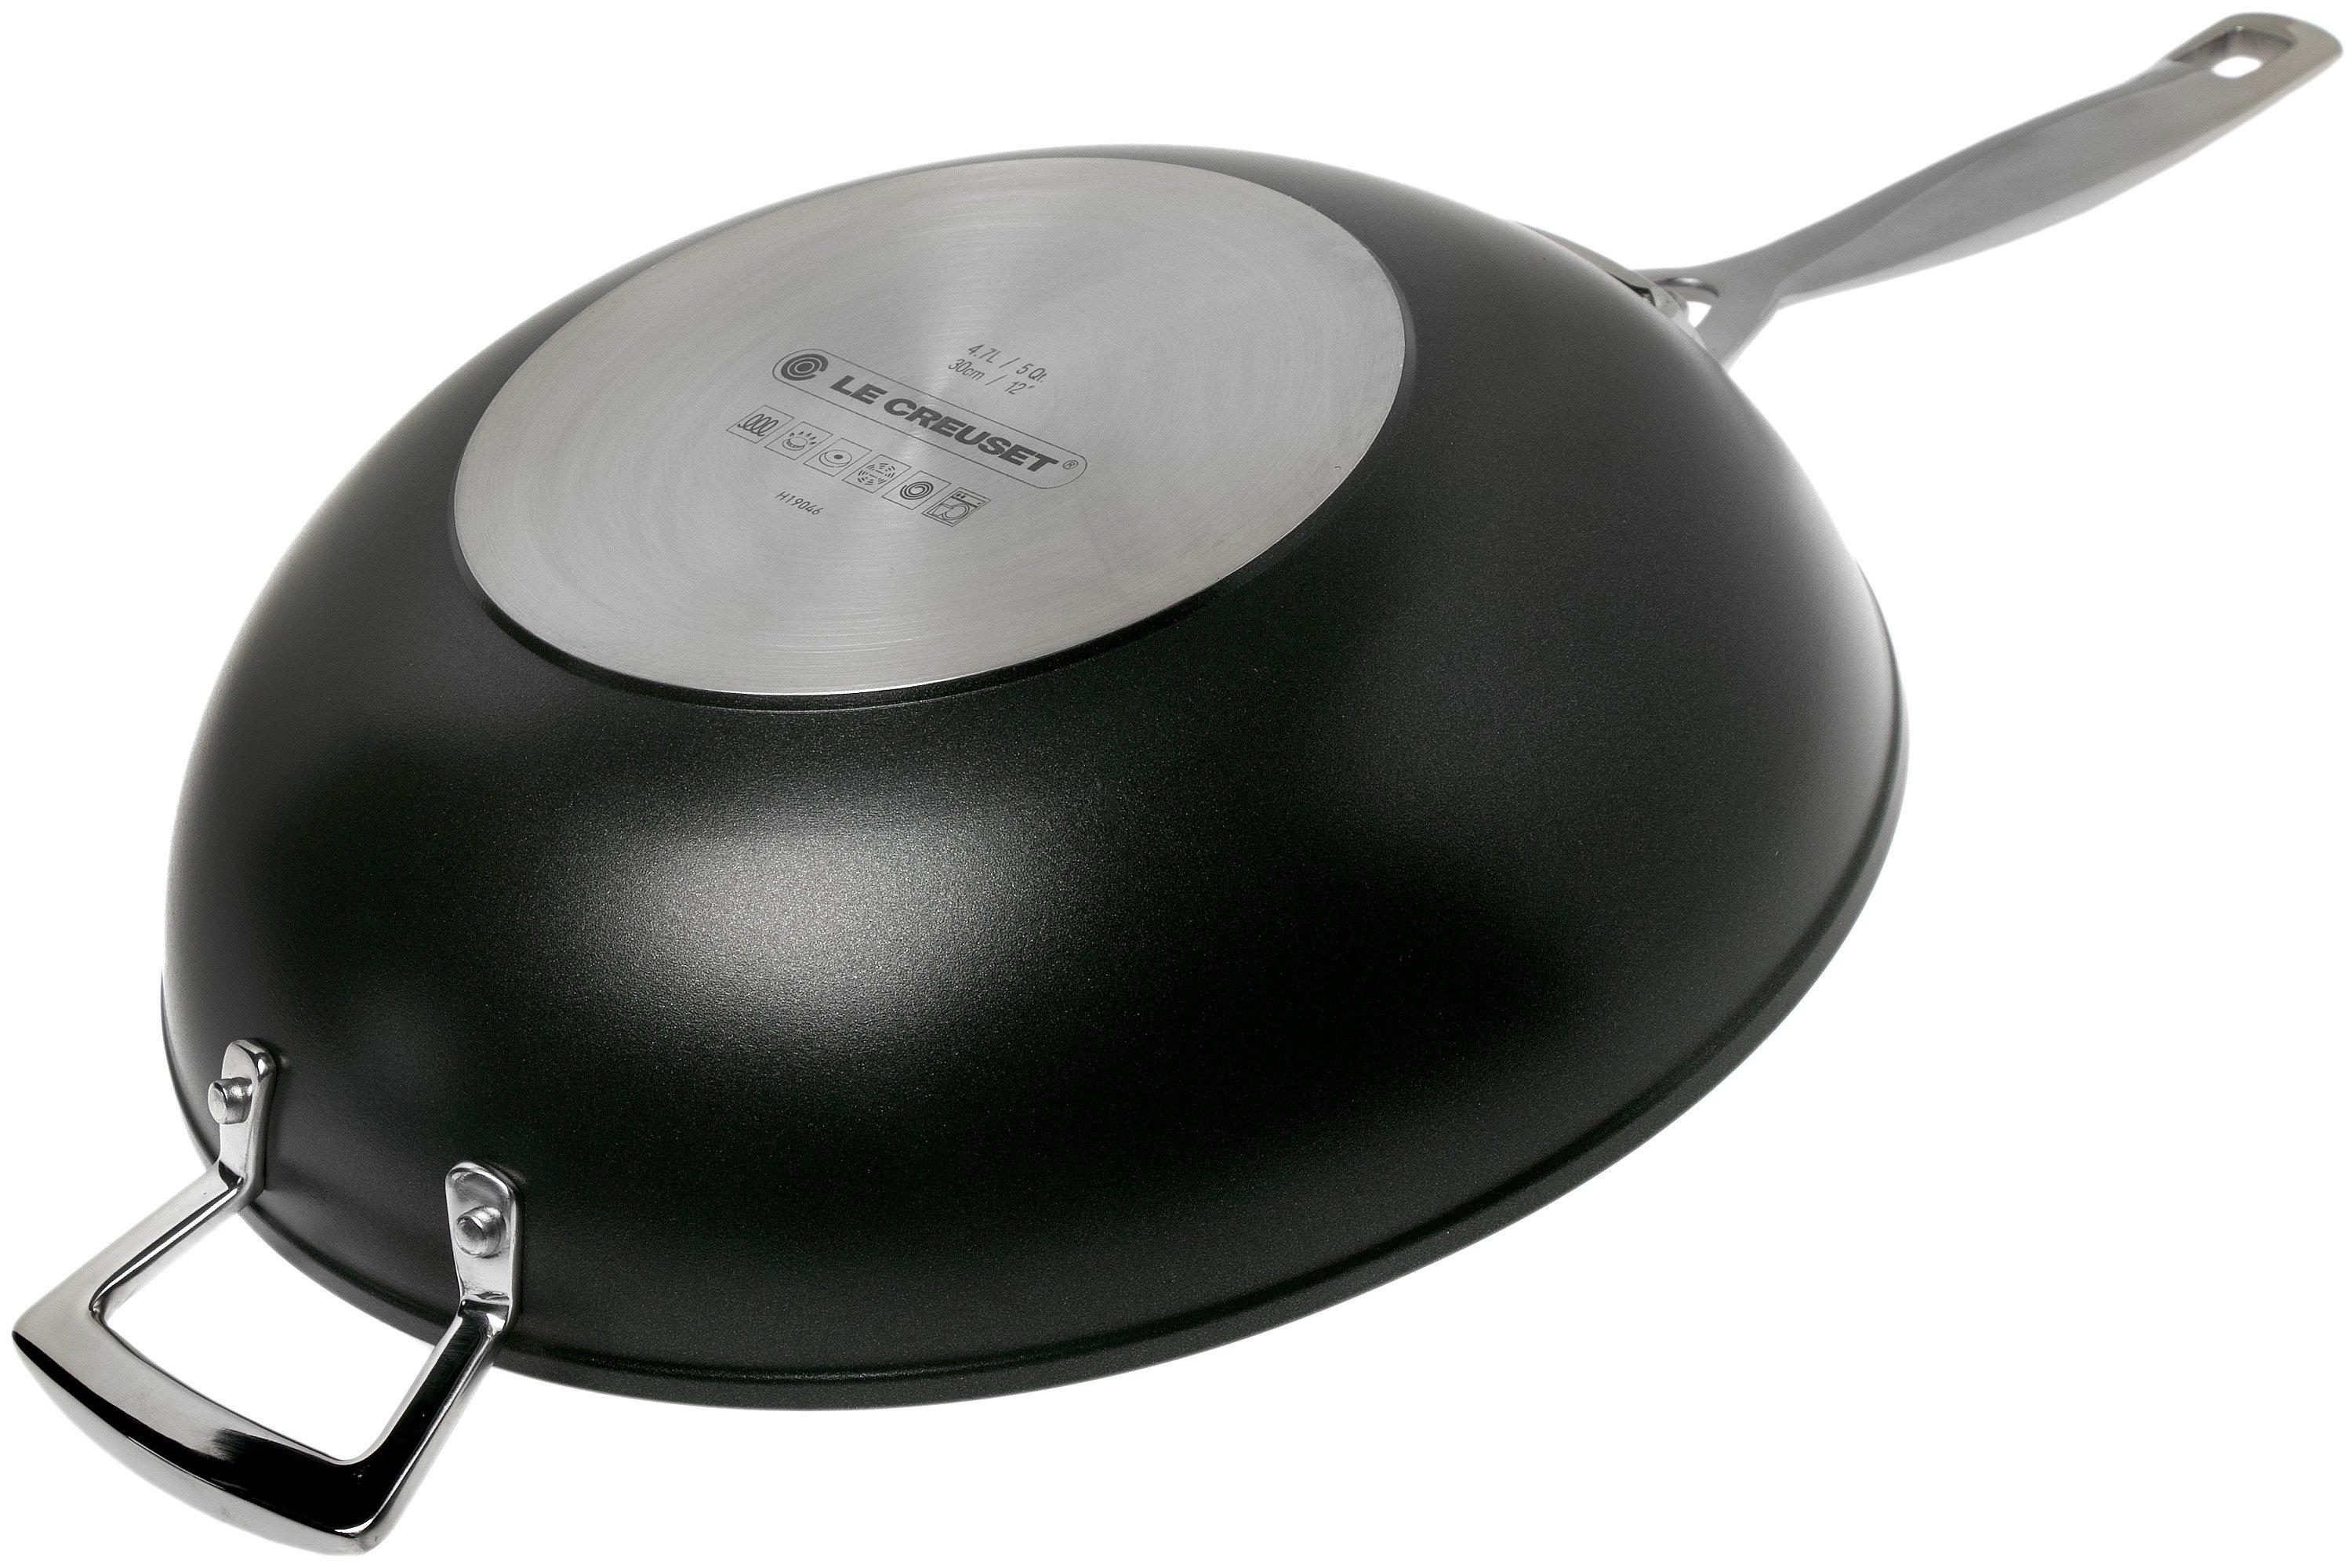 Le Creuset TNS wok pan 30 cm Advantageously shopping at